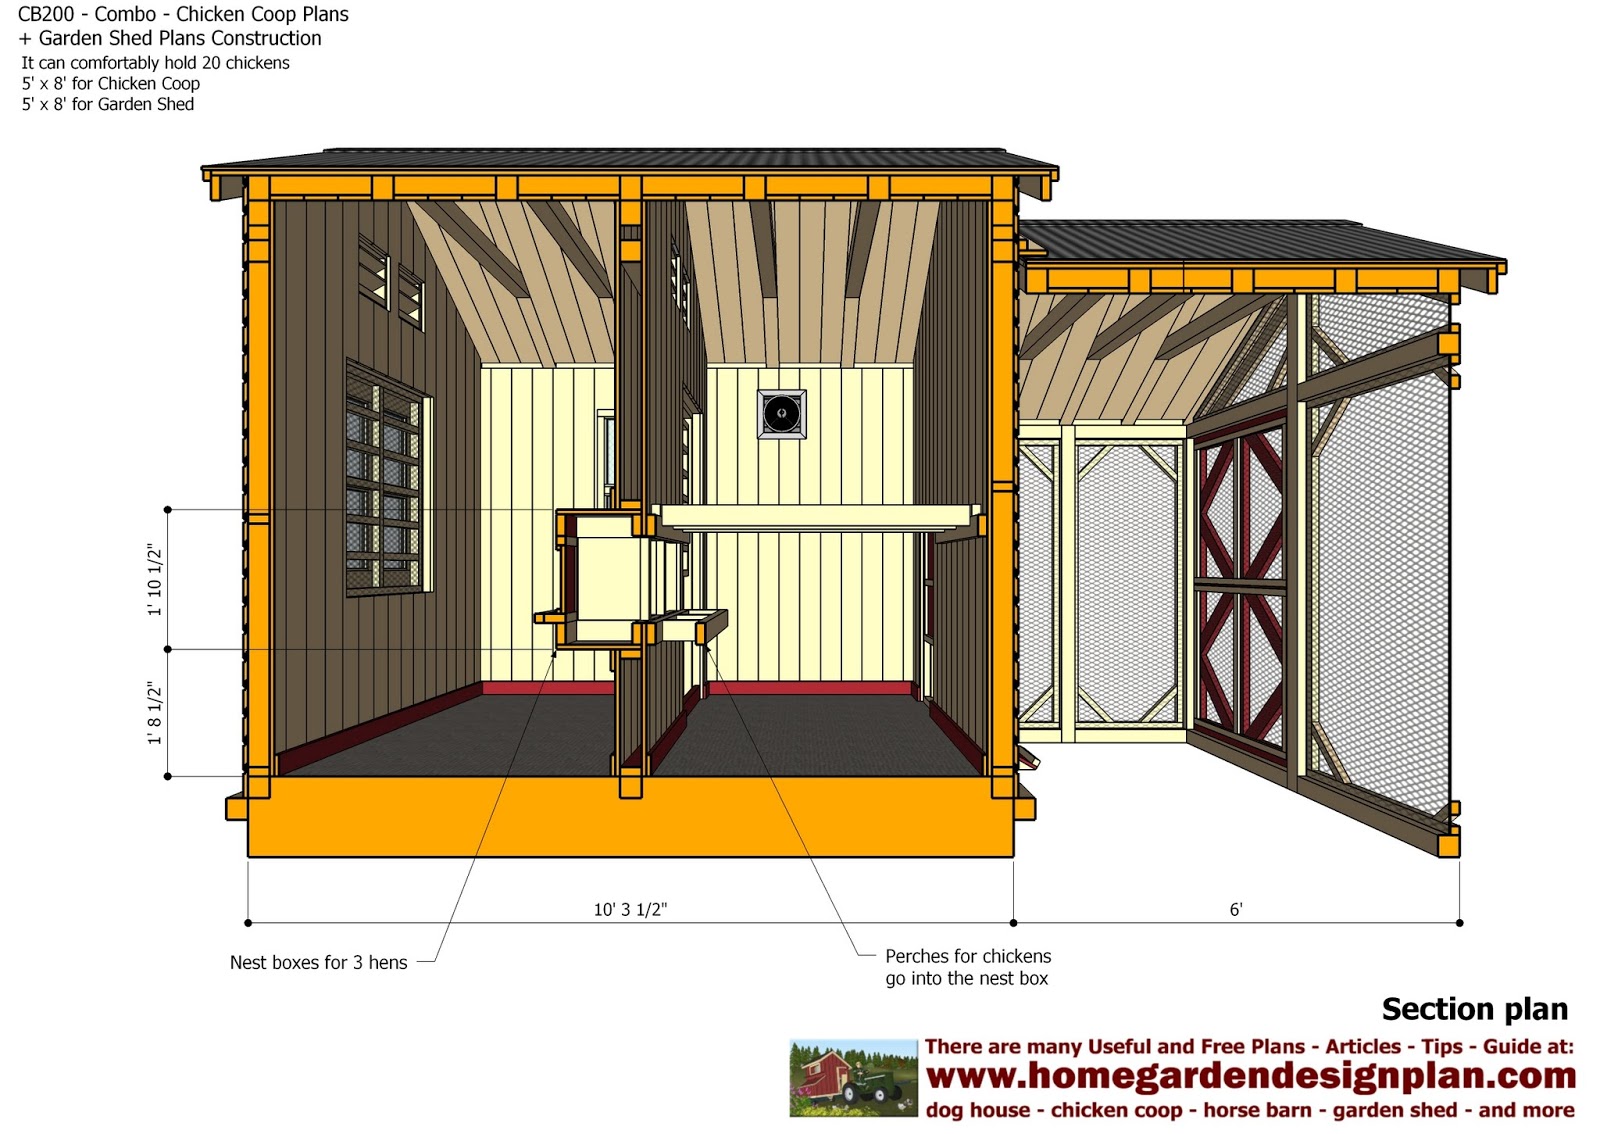 home garden plans: CB200 - Combo Plans - Chicken Coop 